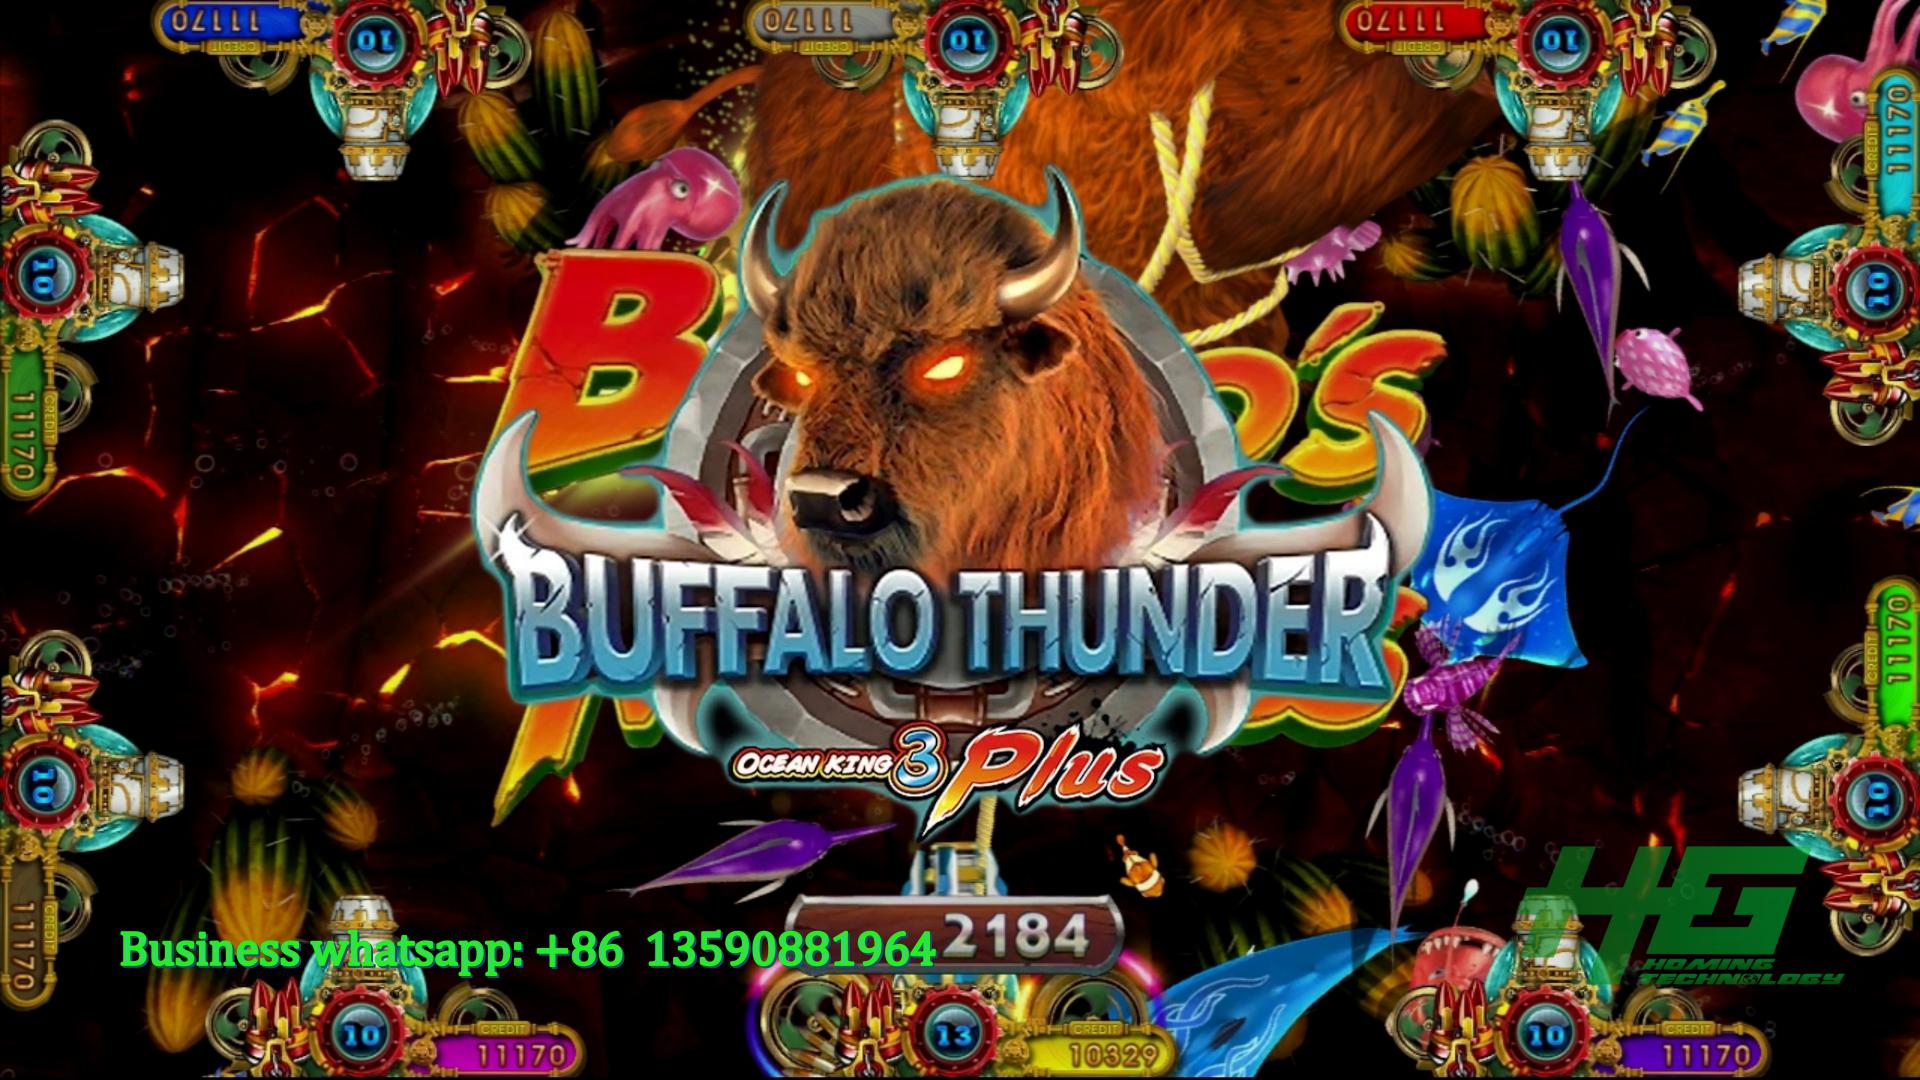 IGS Original Ocean King 3 Plus Buffalo Thunder,Buffalo Thunder Fish Casino Game Machine For Sale